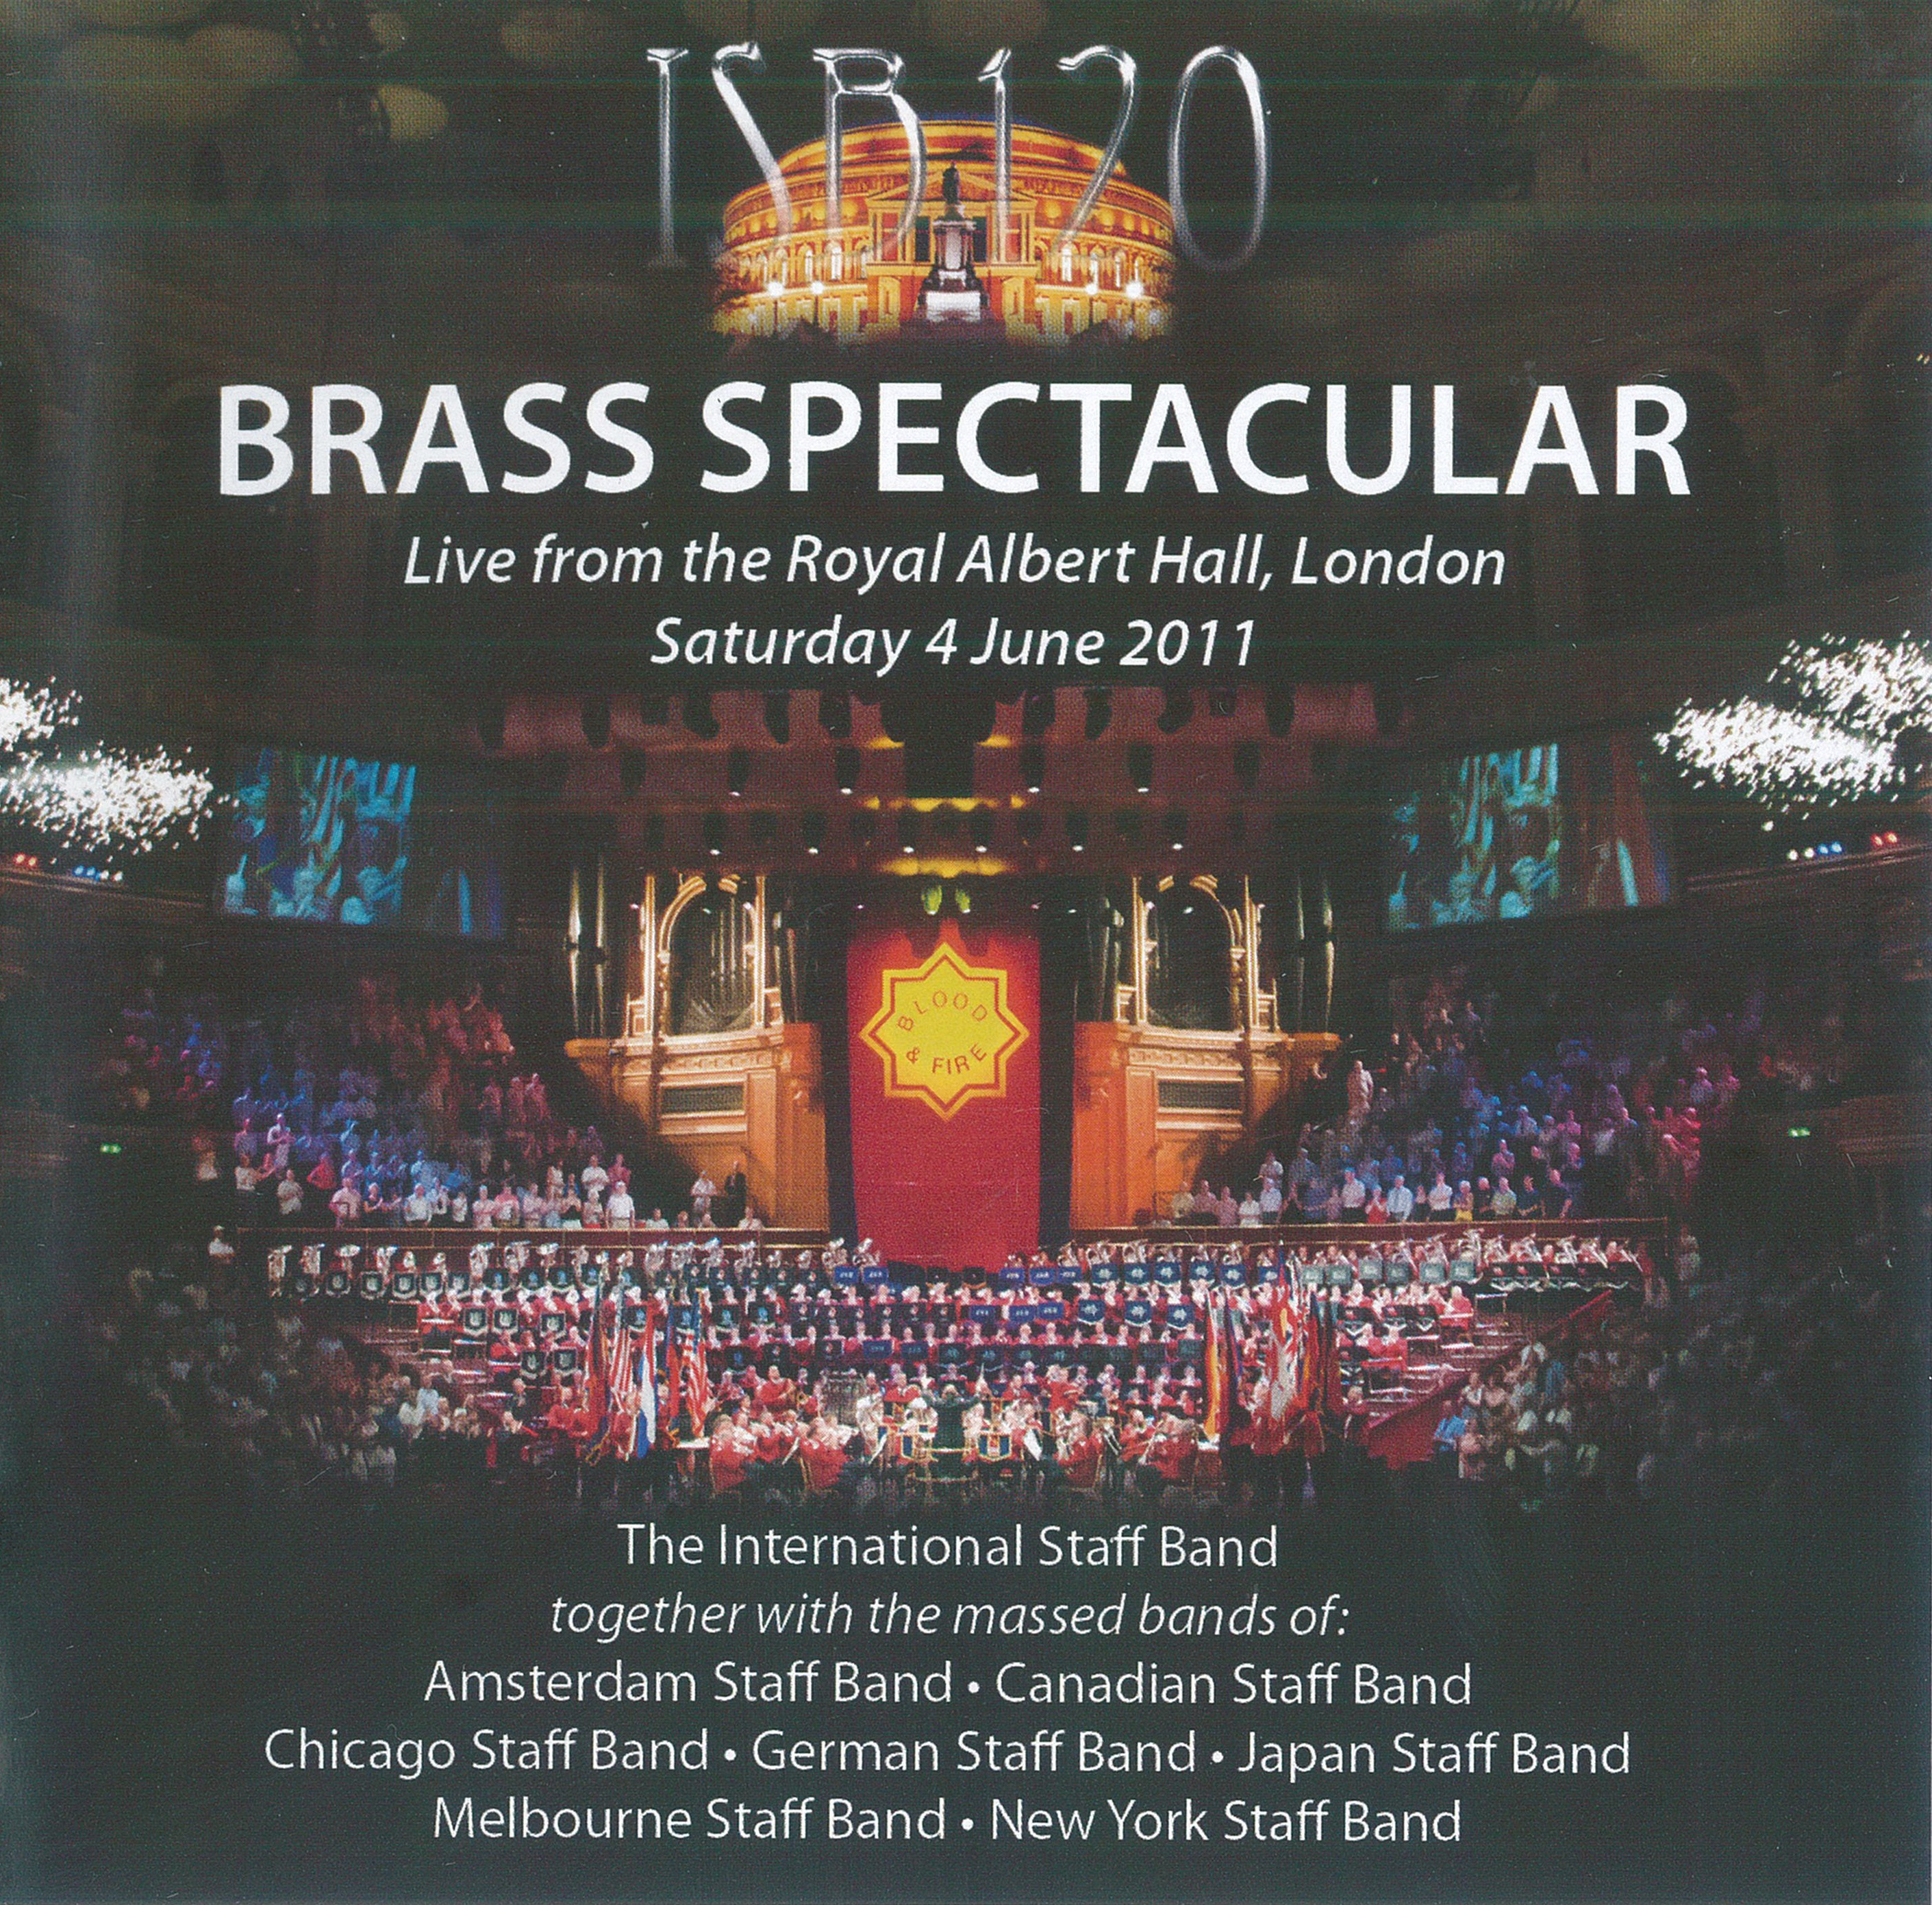 ISB120 Brass Spectacular (Saturday Evening) - Download